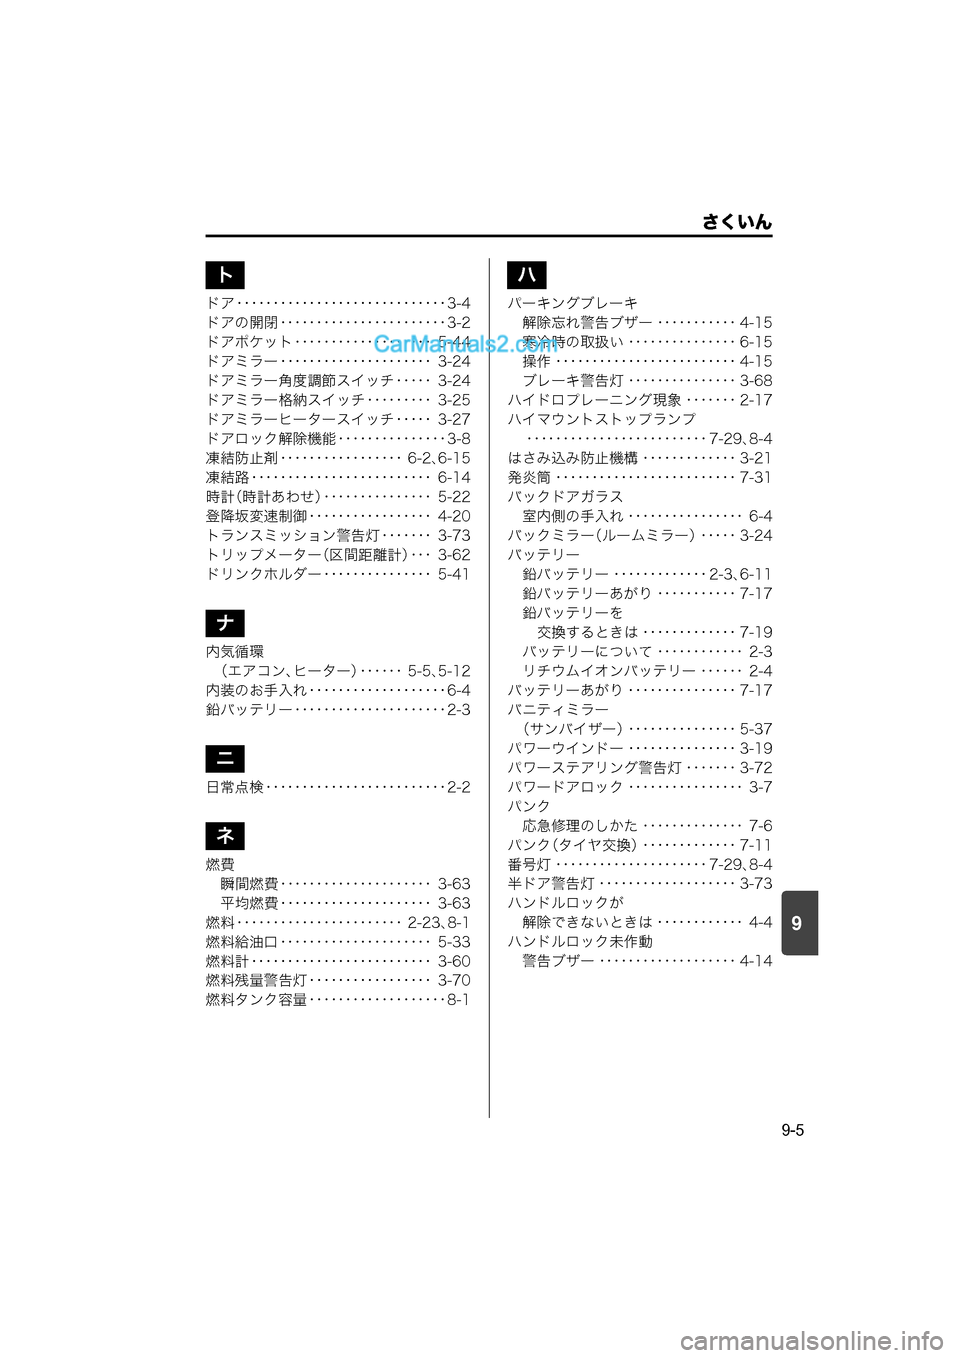 MAZDA MODEL CARROL 2015  取扱説明書 (キャロル) (in Japanese) 9
さくいん
9-5
ドア ･････････････････････････････ 3-4
ドアの開閉 ･･････････････････････